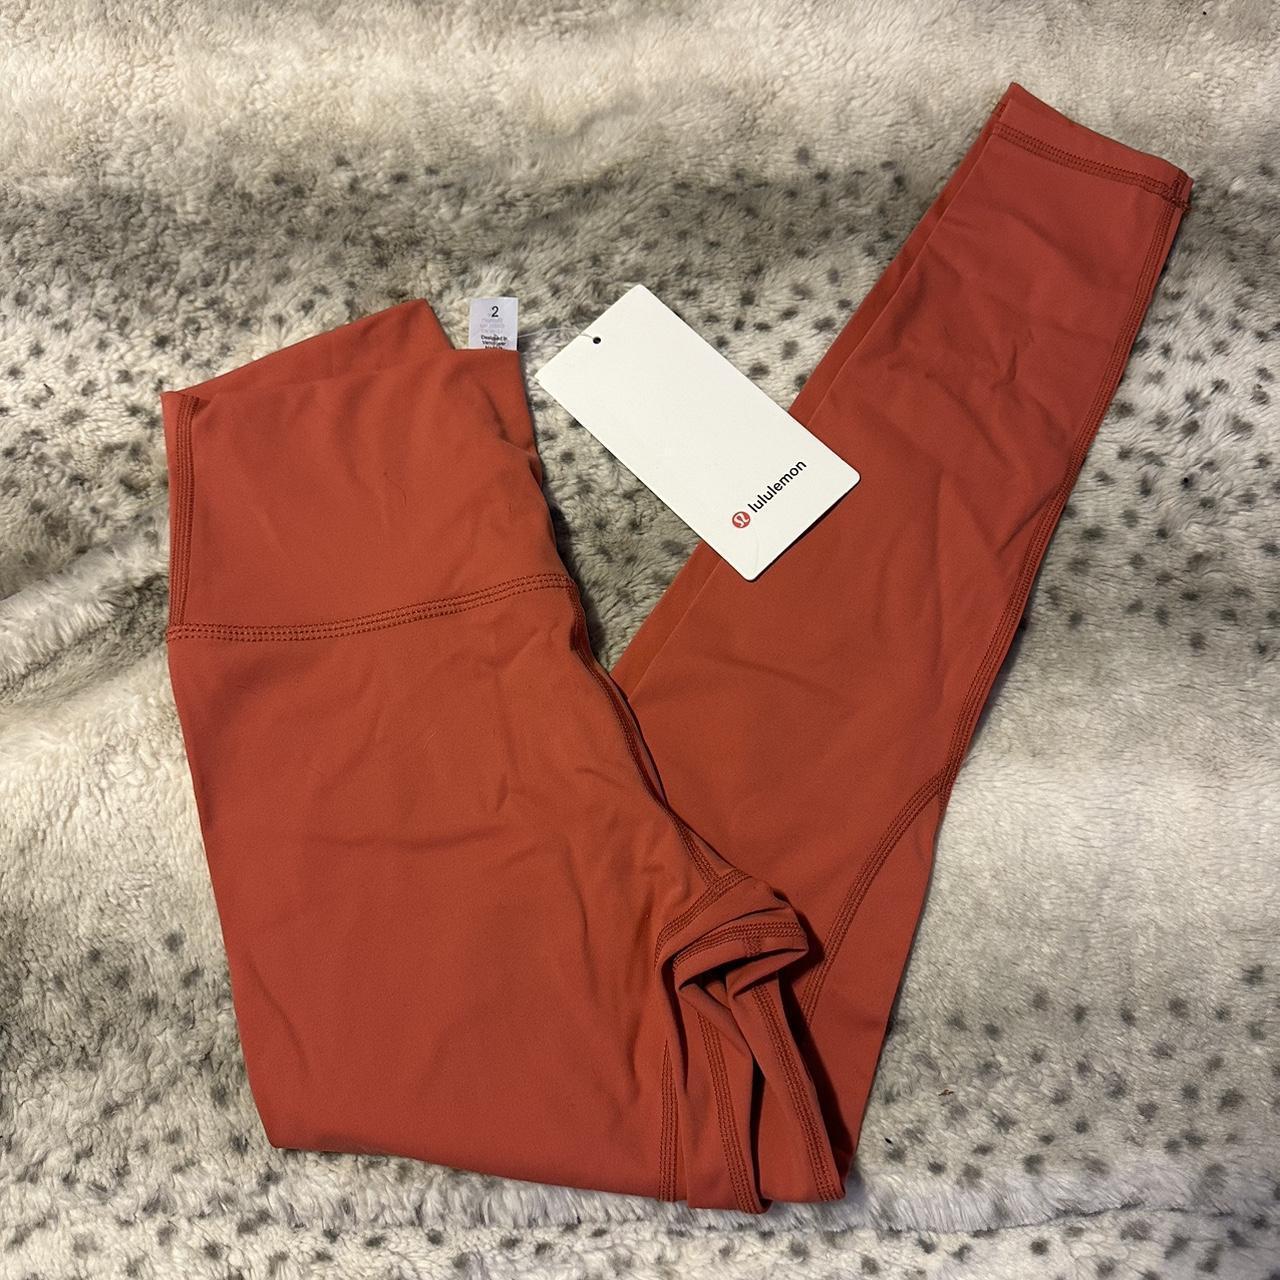 Lululemon cropped orange/red camo leggings - Depop